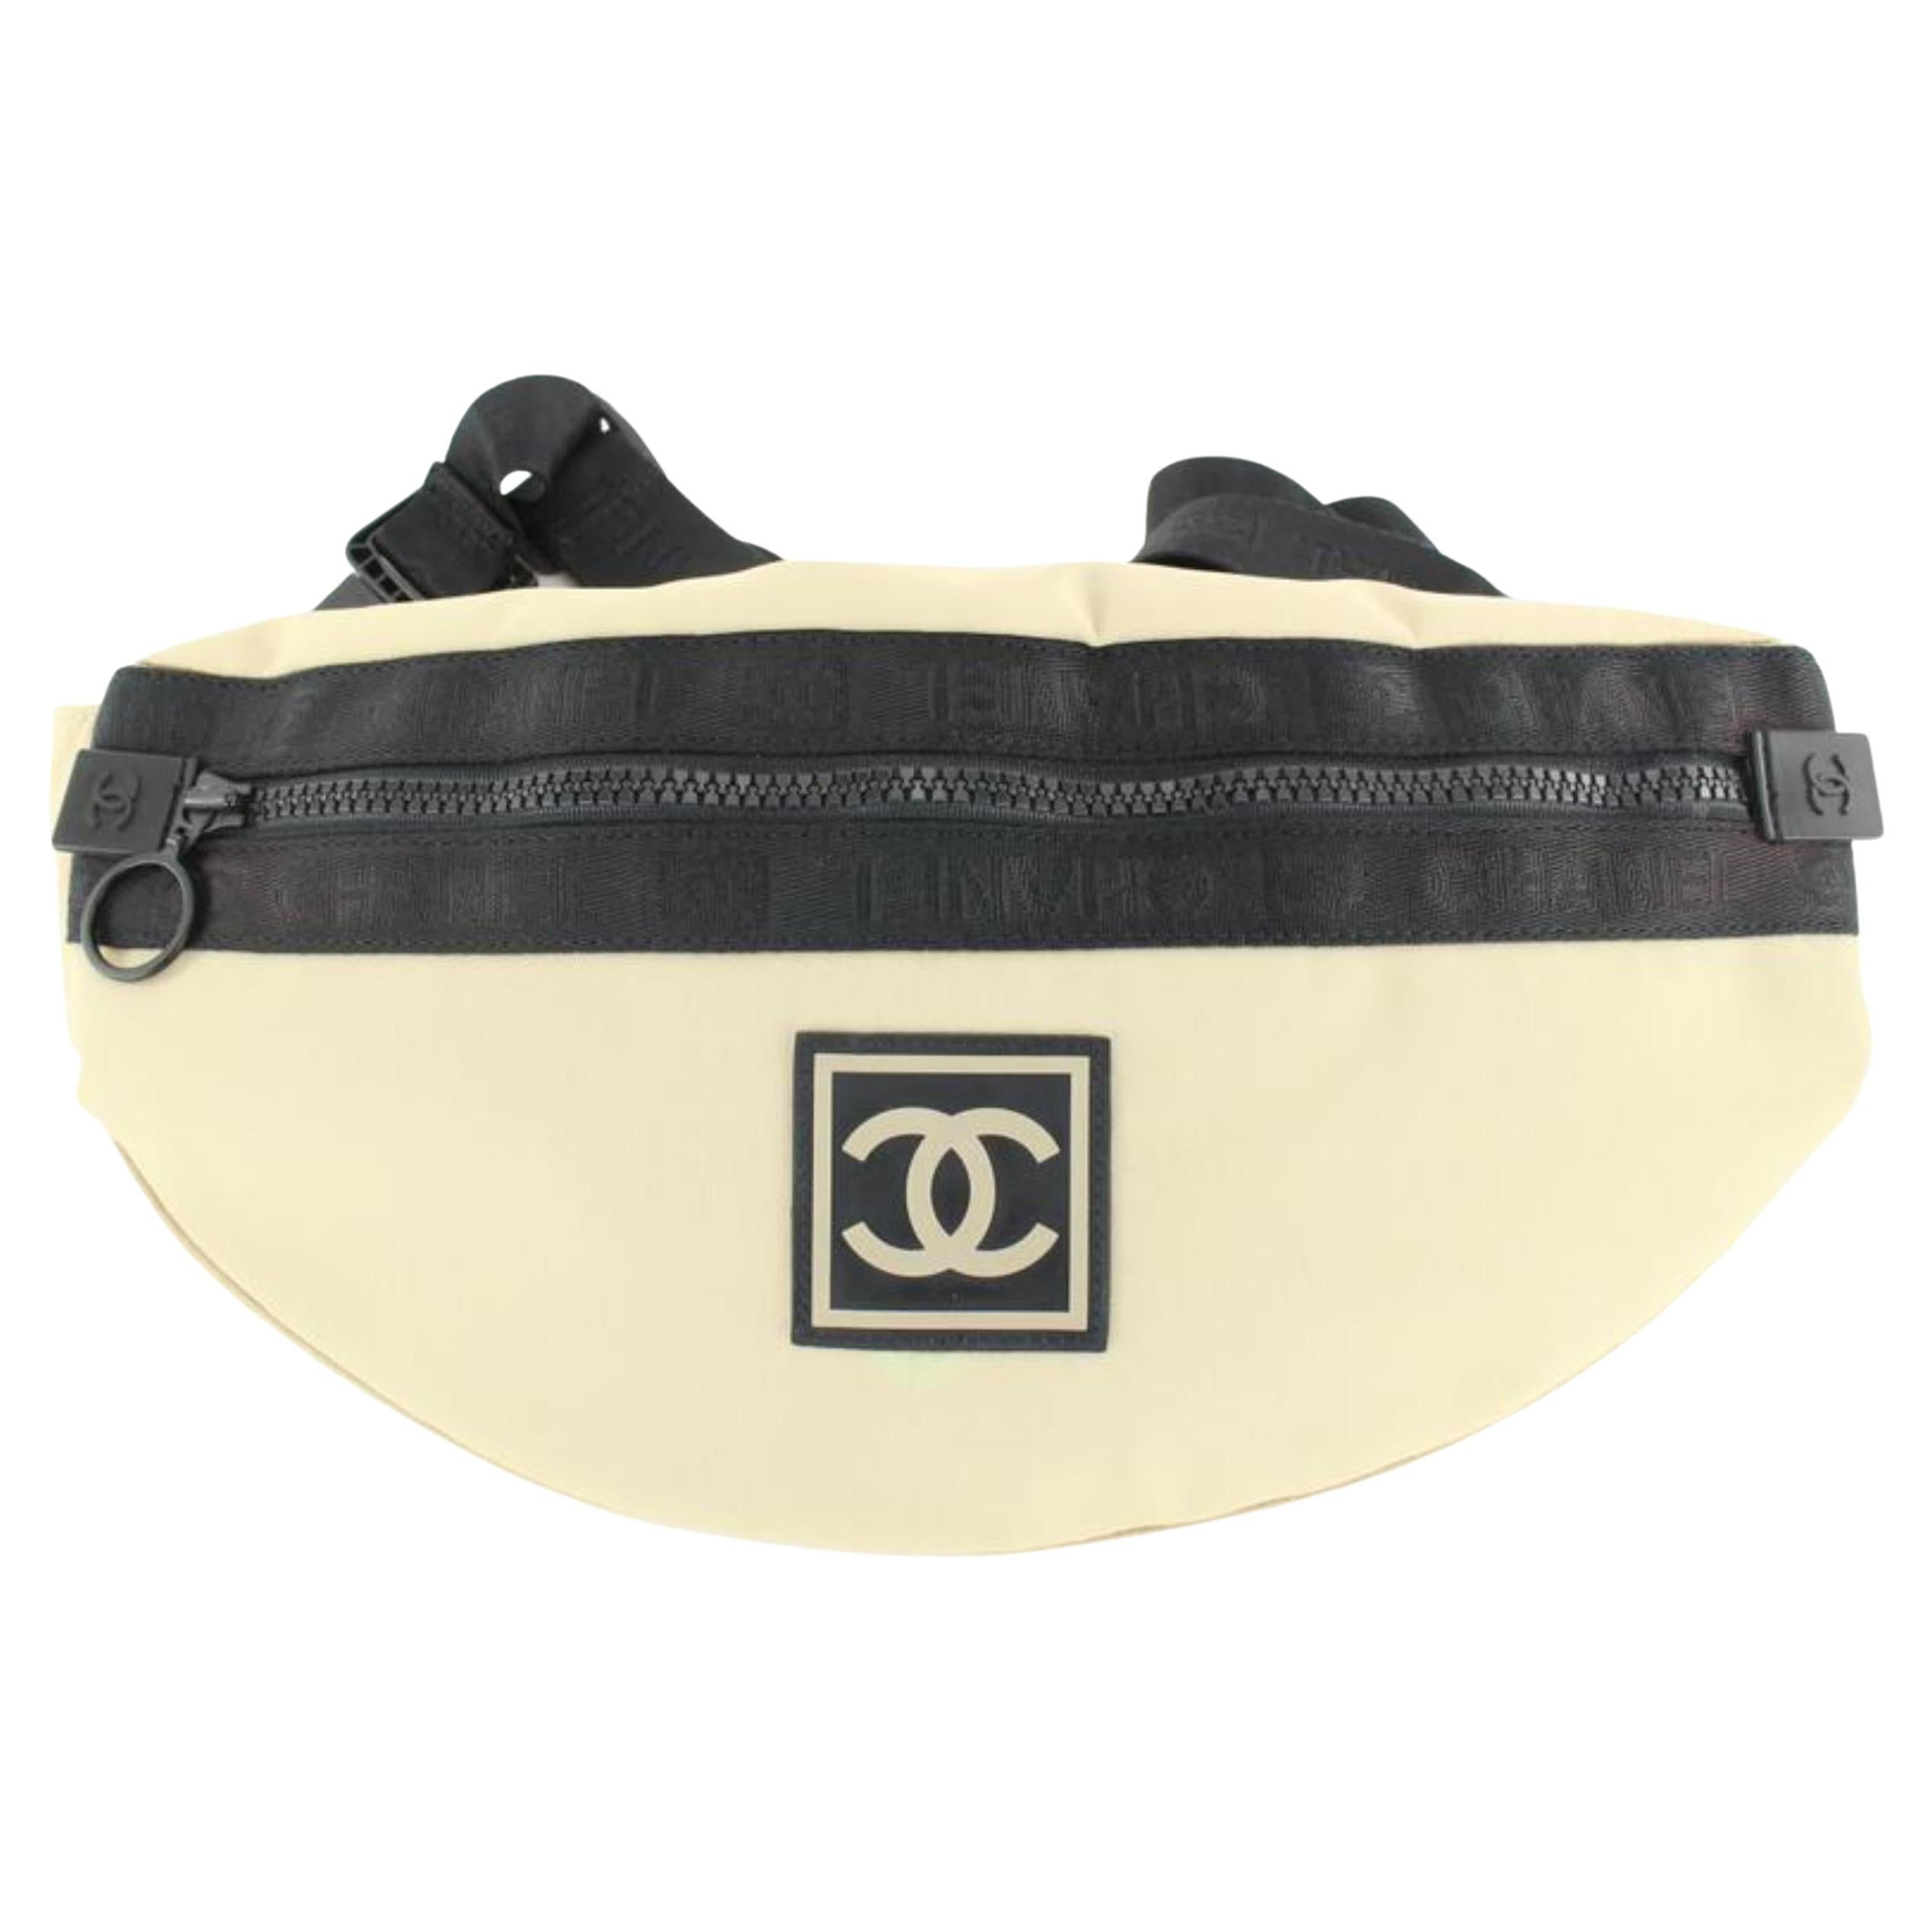 Chanel Bum Bag - 22 For Sale on 1stDibs